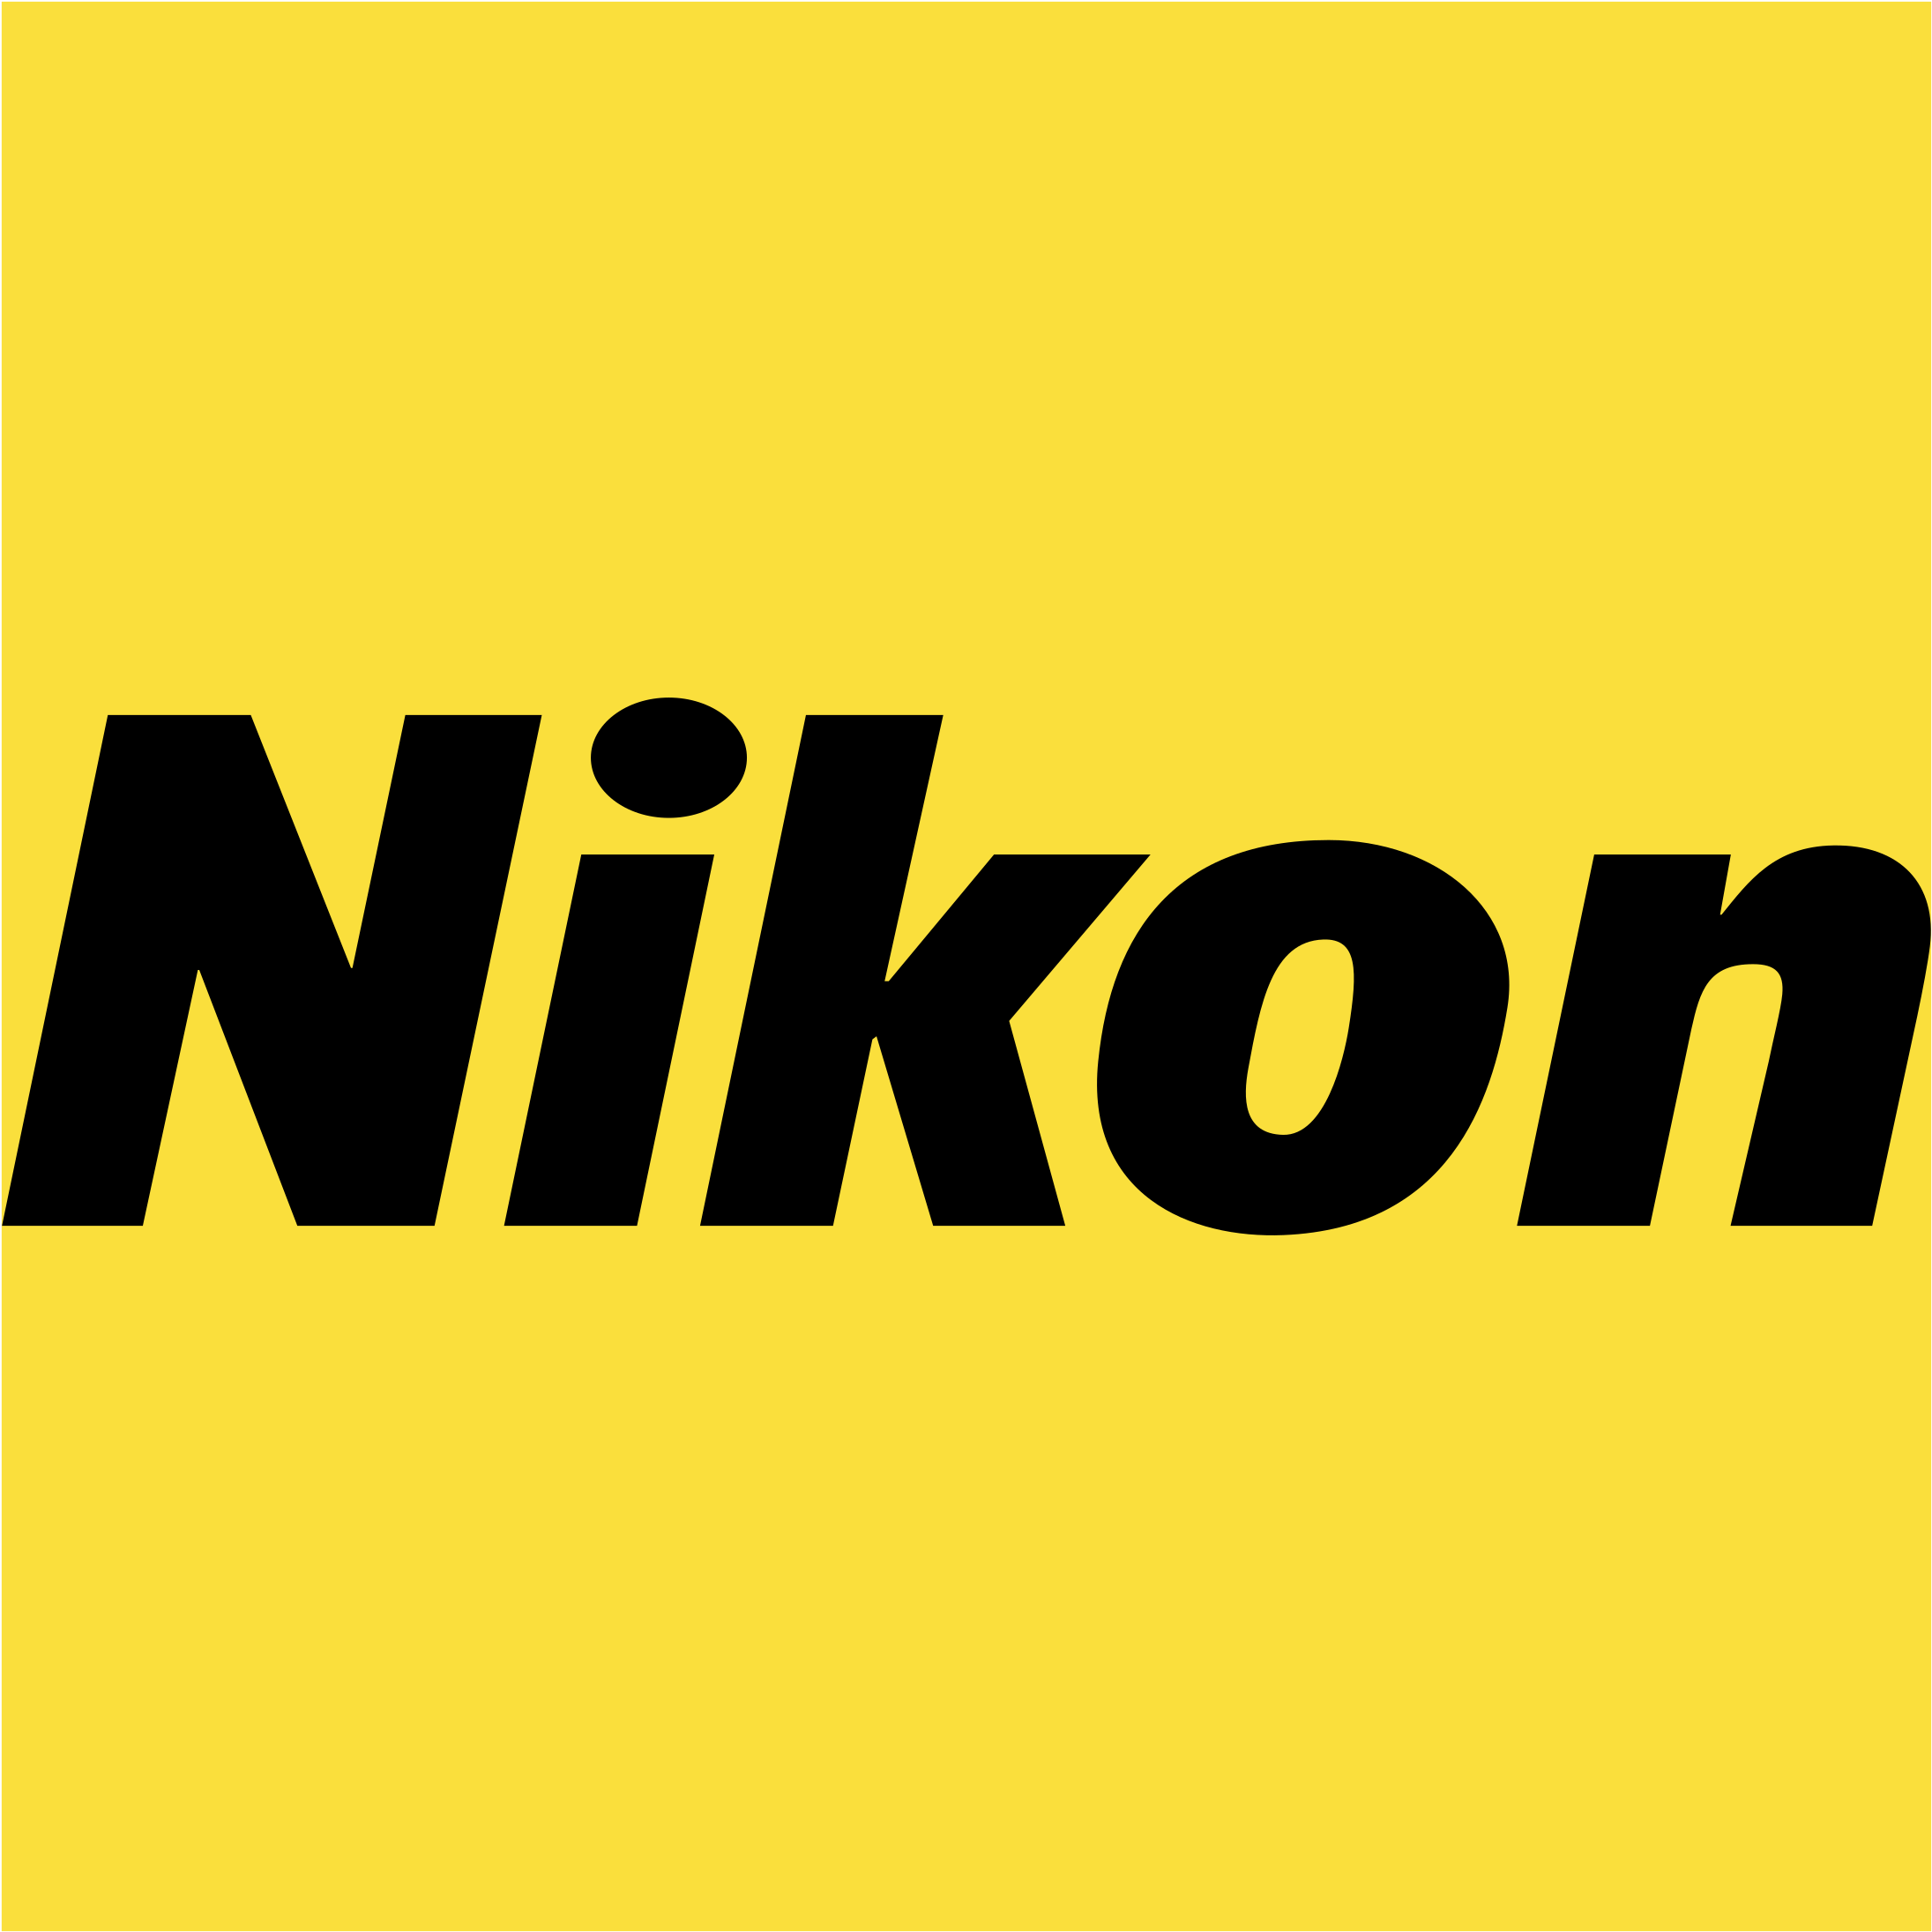 Download Nikon Logo Png Transparent   Nikon Logo   Full Size Png Pluspng.com  - Nikon, Transparent background PNG HD thumbnail